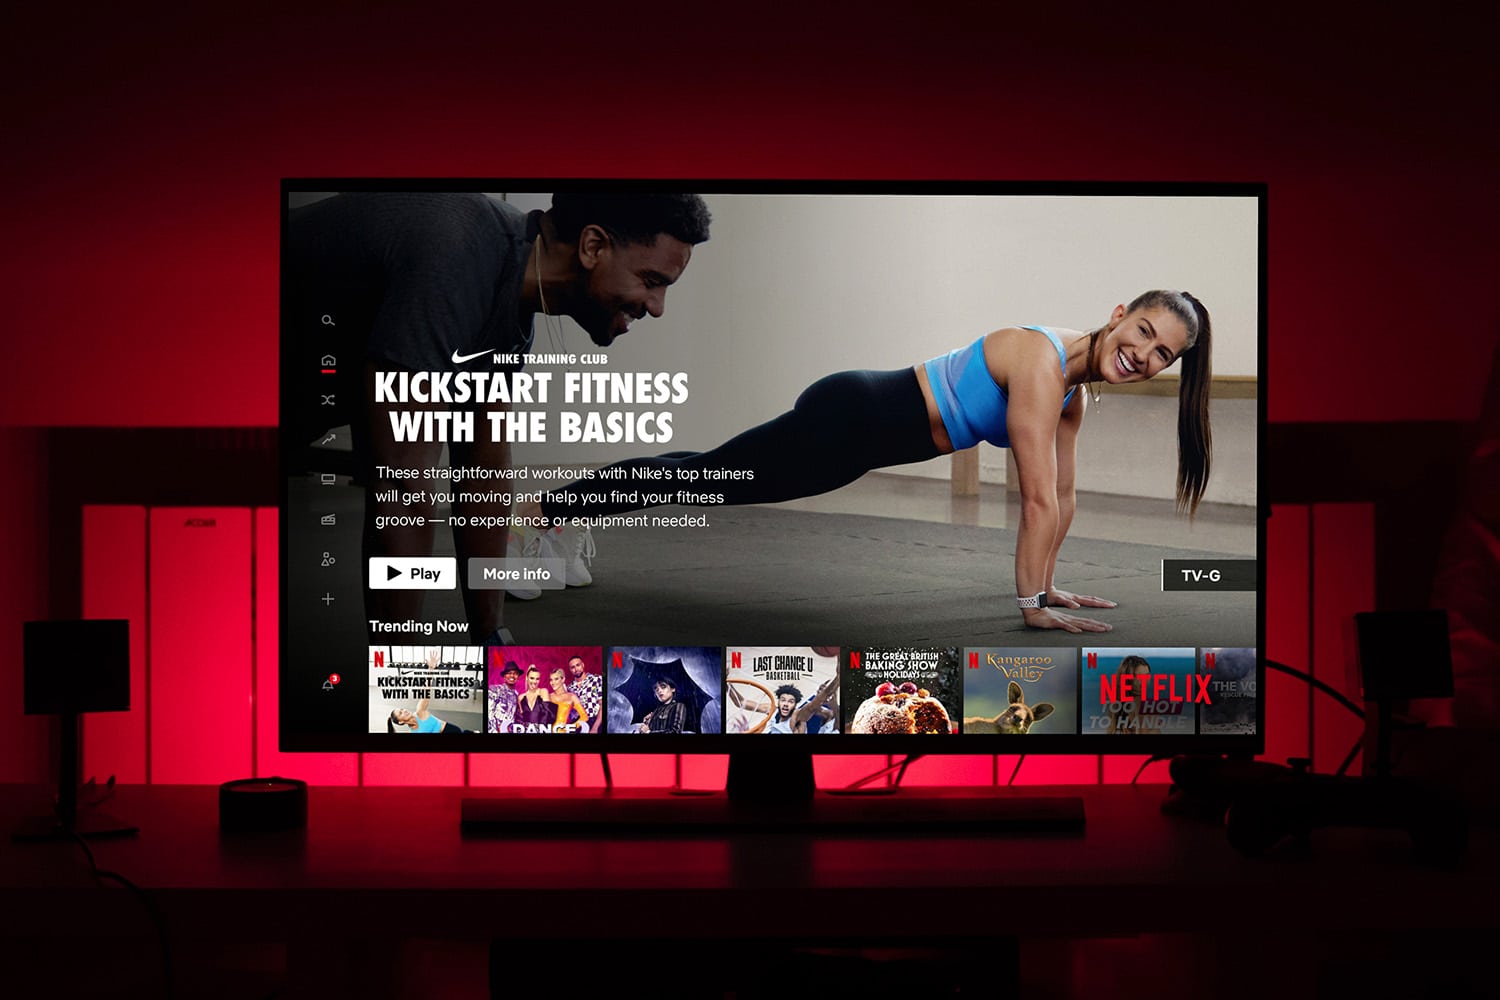 Nike Training Club offered through Netflix